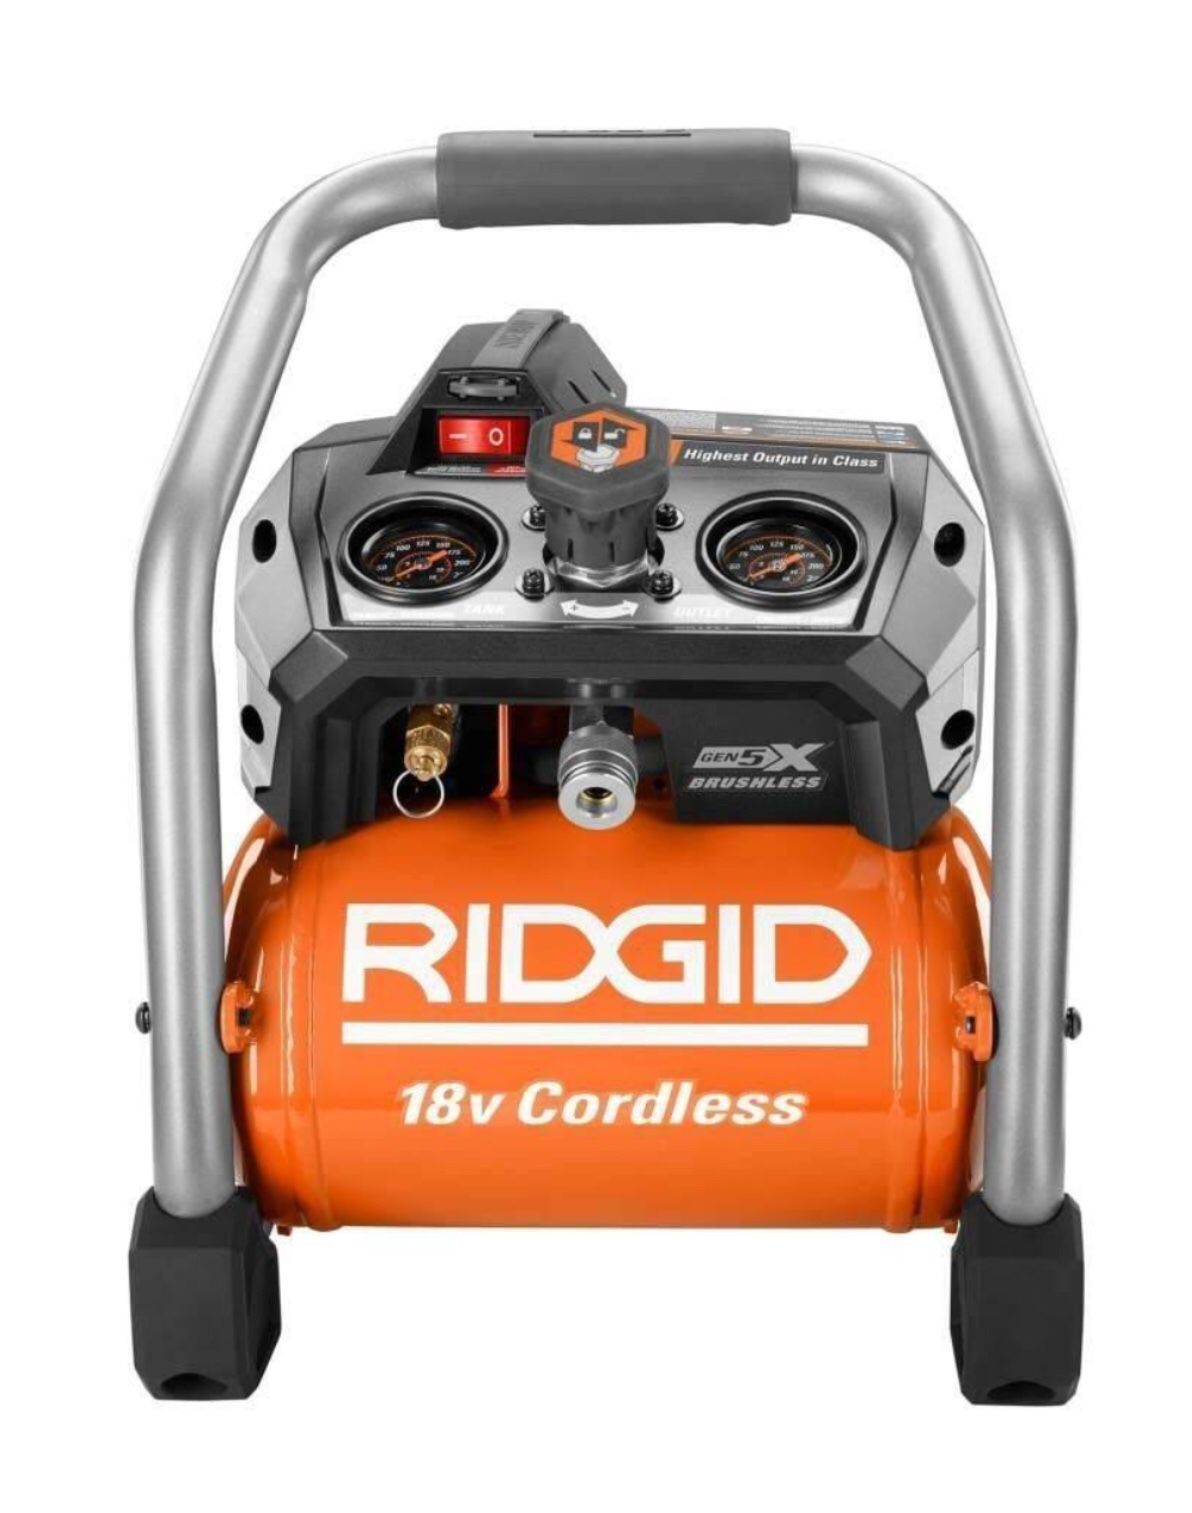 Ridgid cordless 18v air compressor